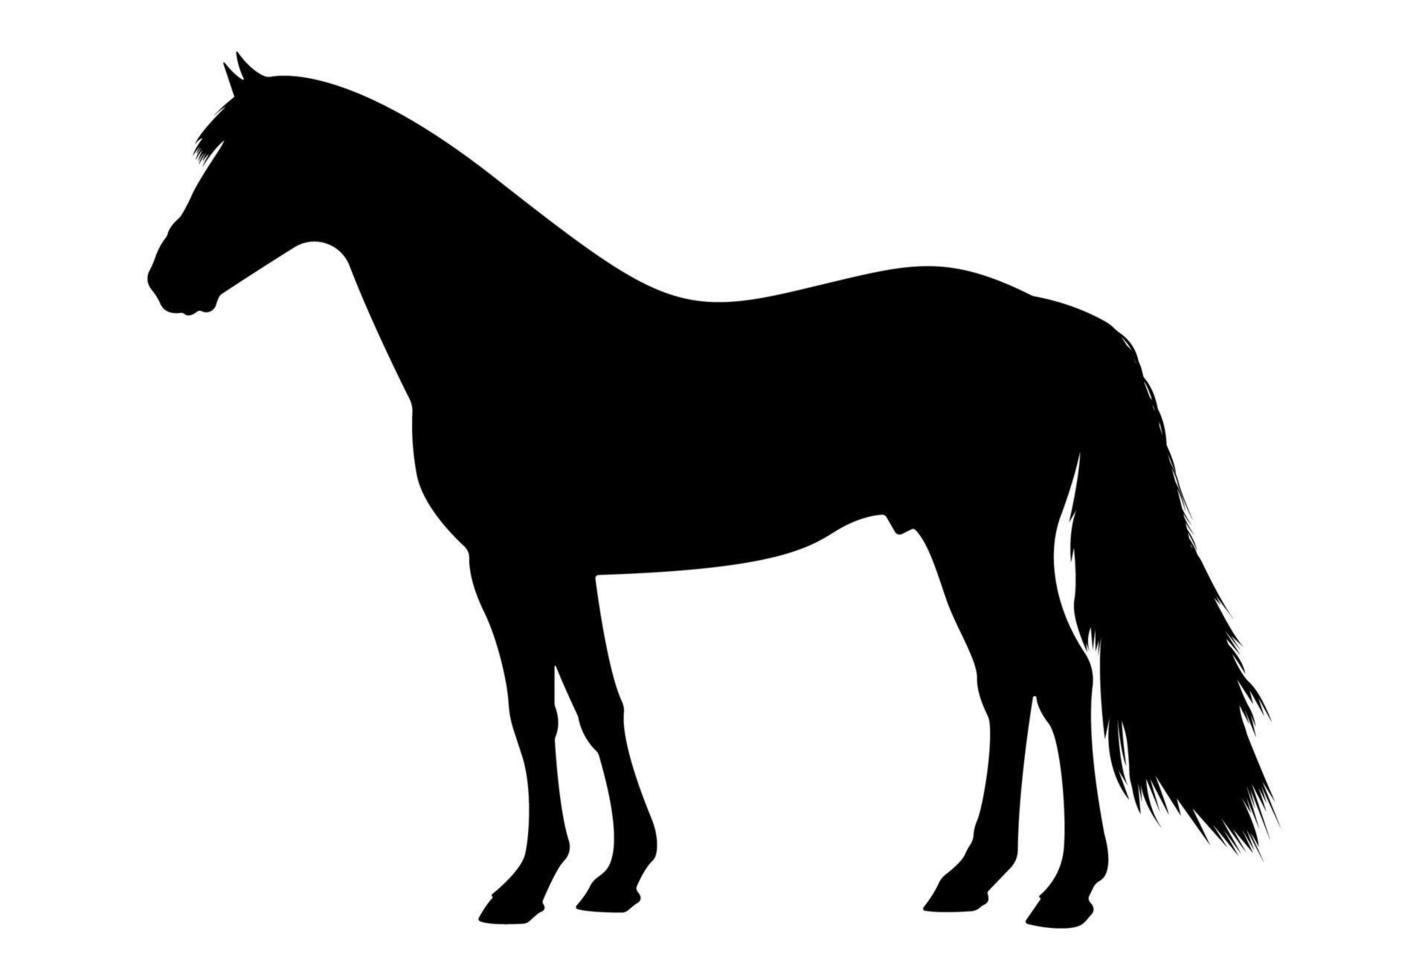 Horse animal Silhouette Illustration. vector